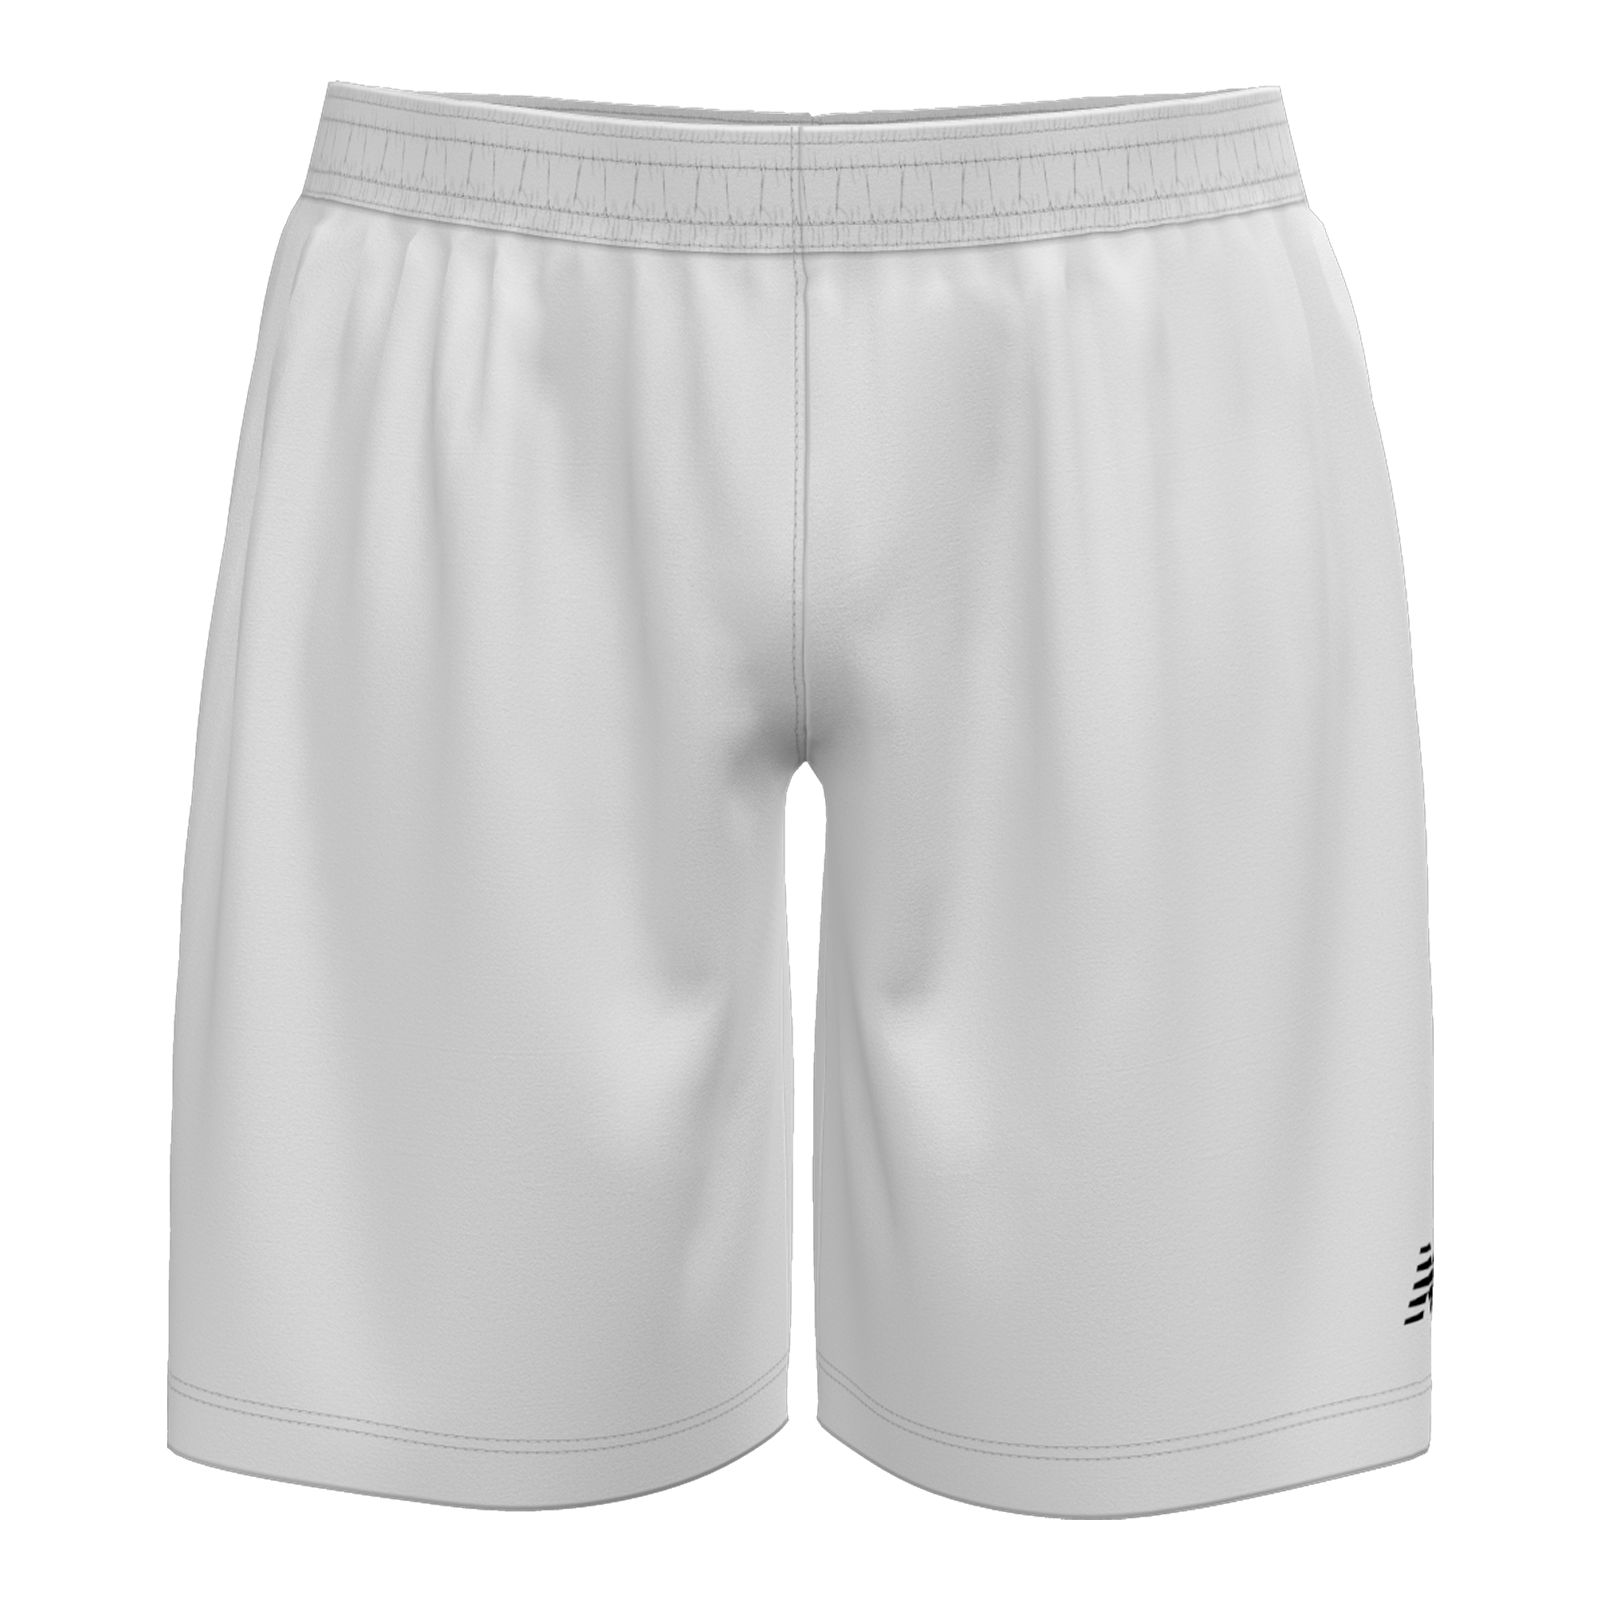 Adidas Men's Basketball Pro Block Shorts, XL, Black/White